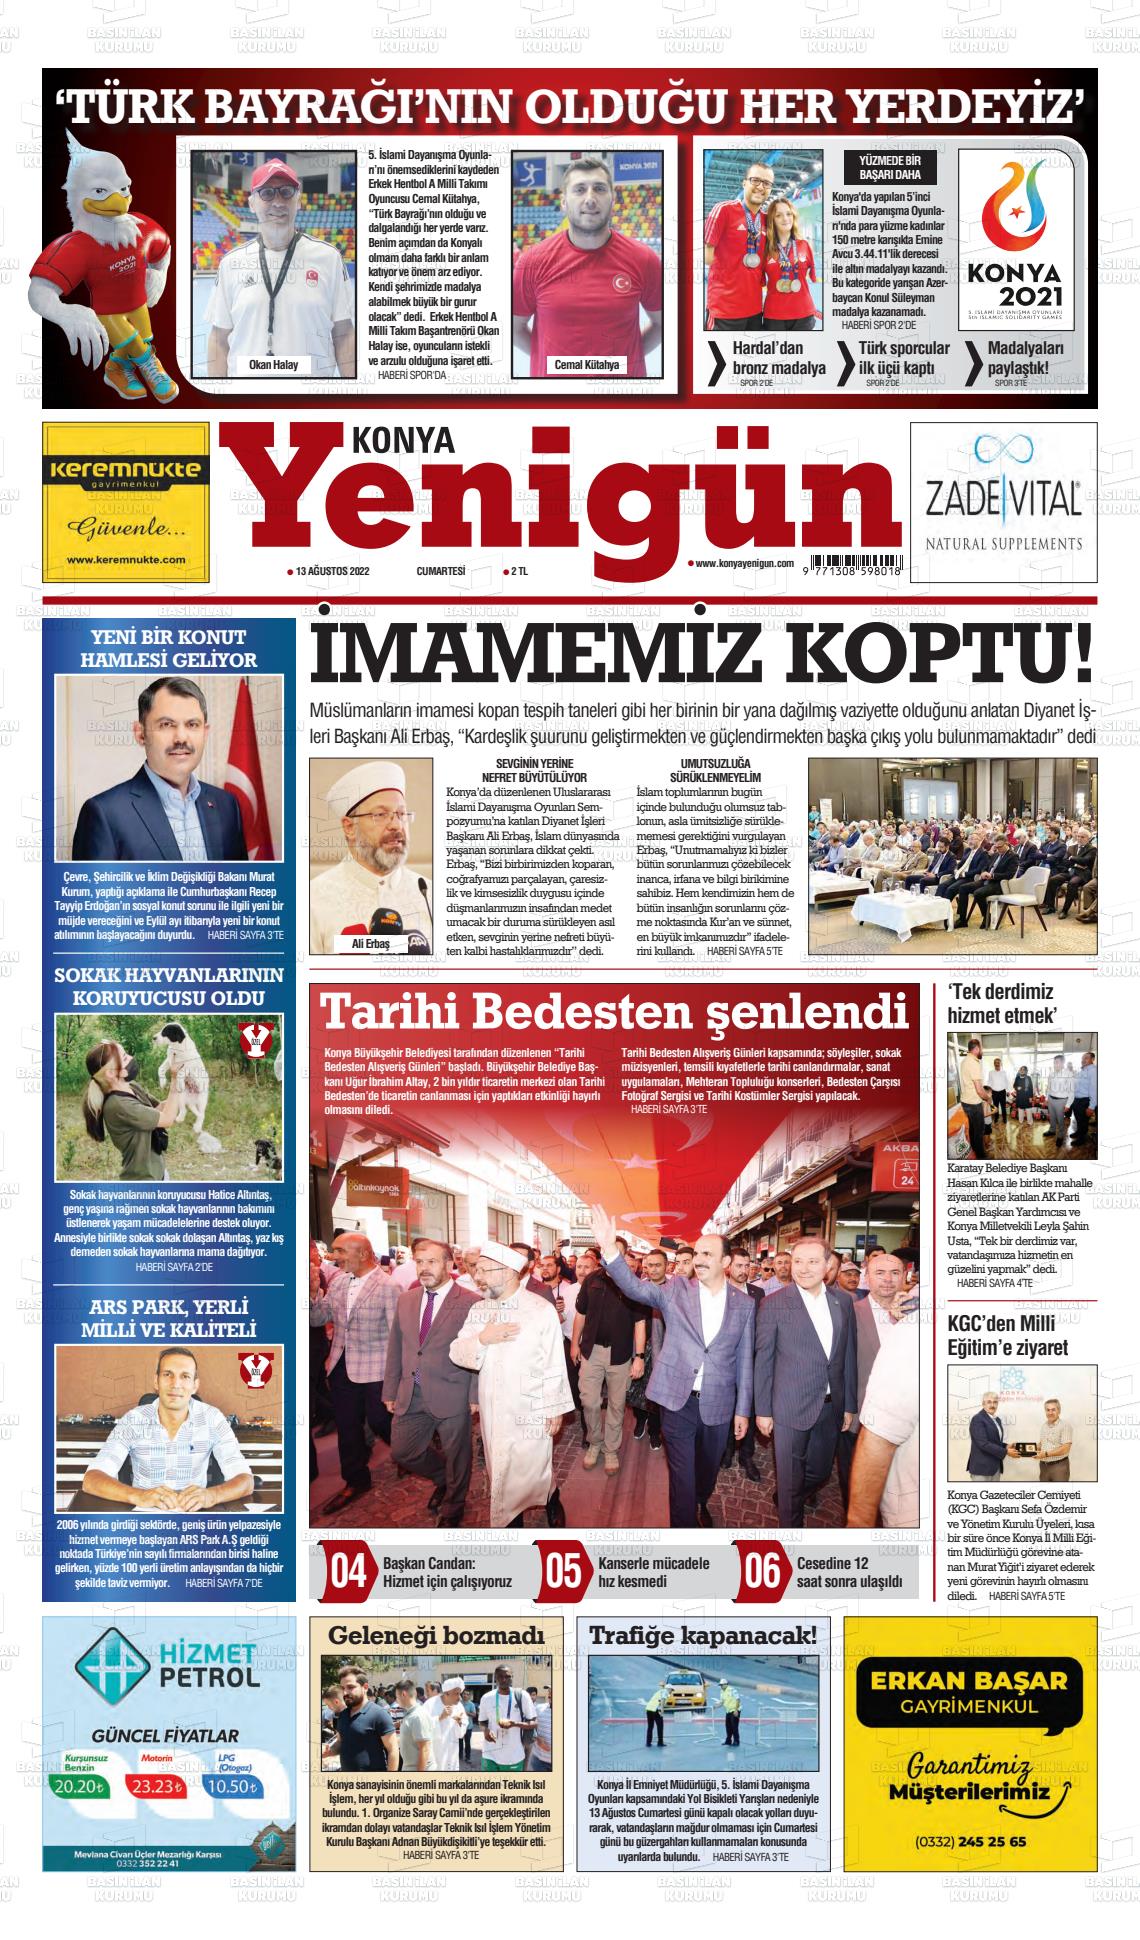 13 Ağustos 2022 Konya YeniGün Gazete Manşeti